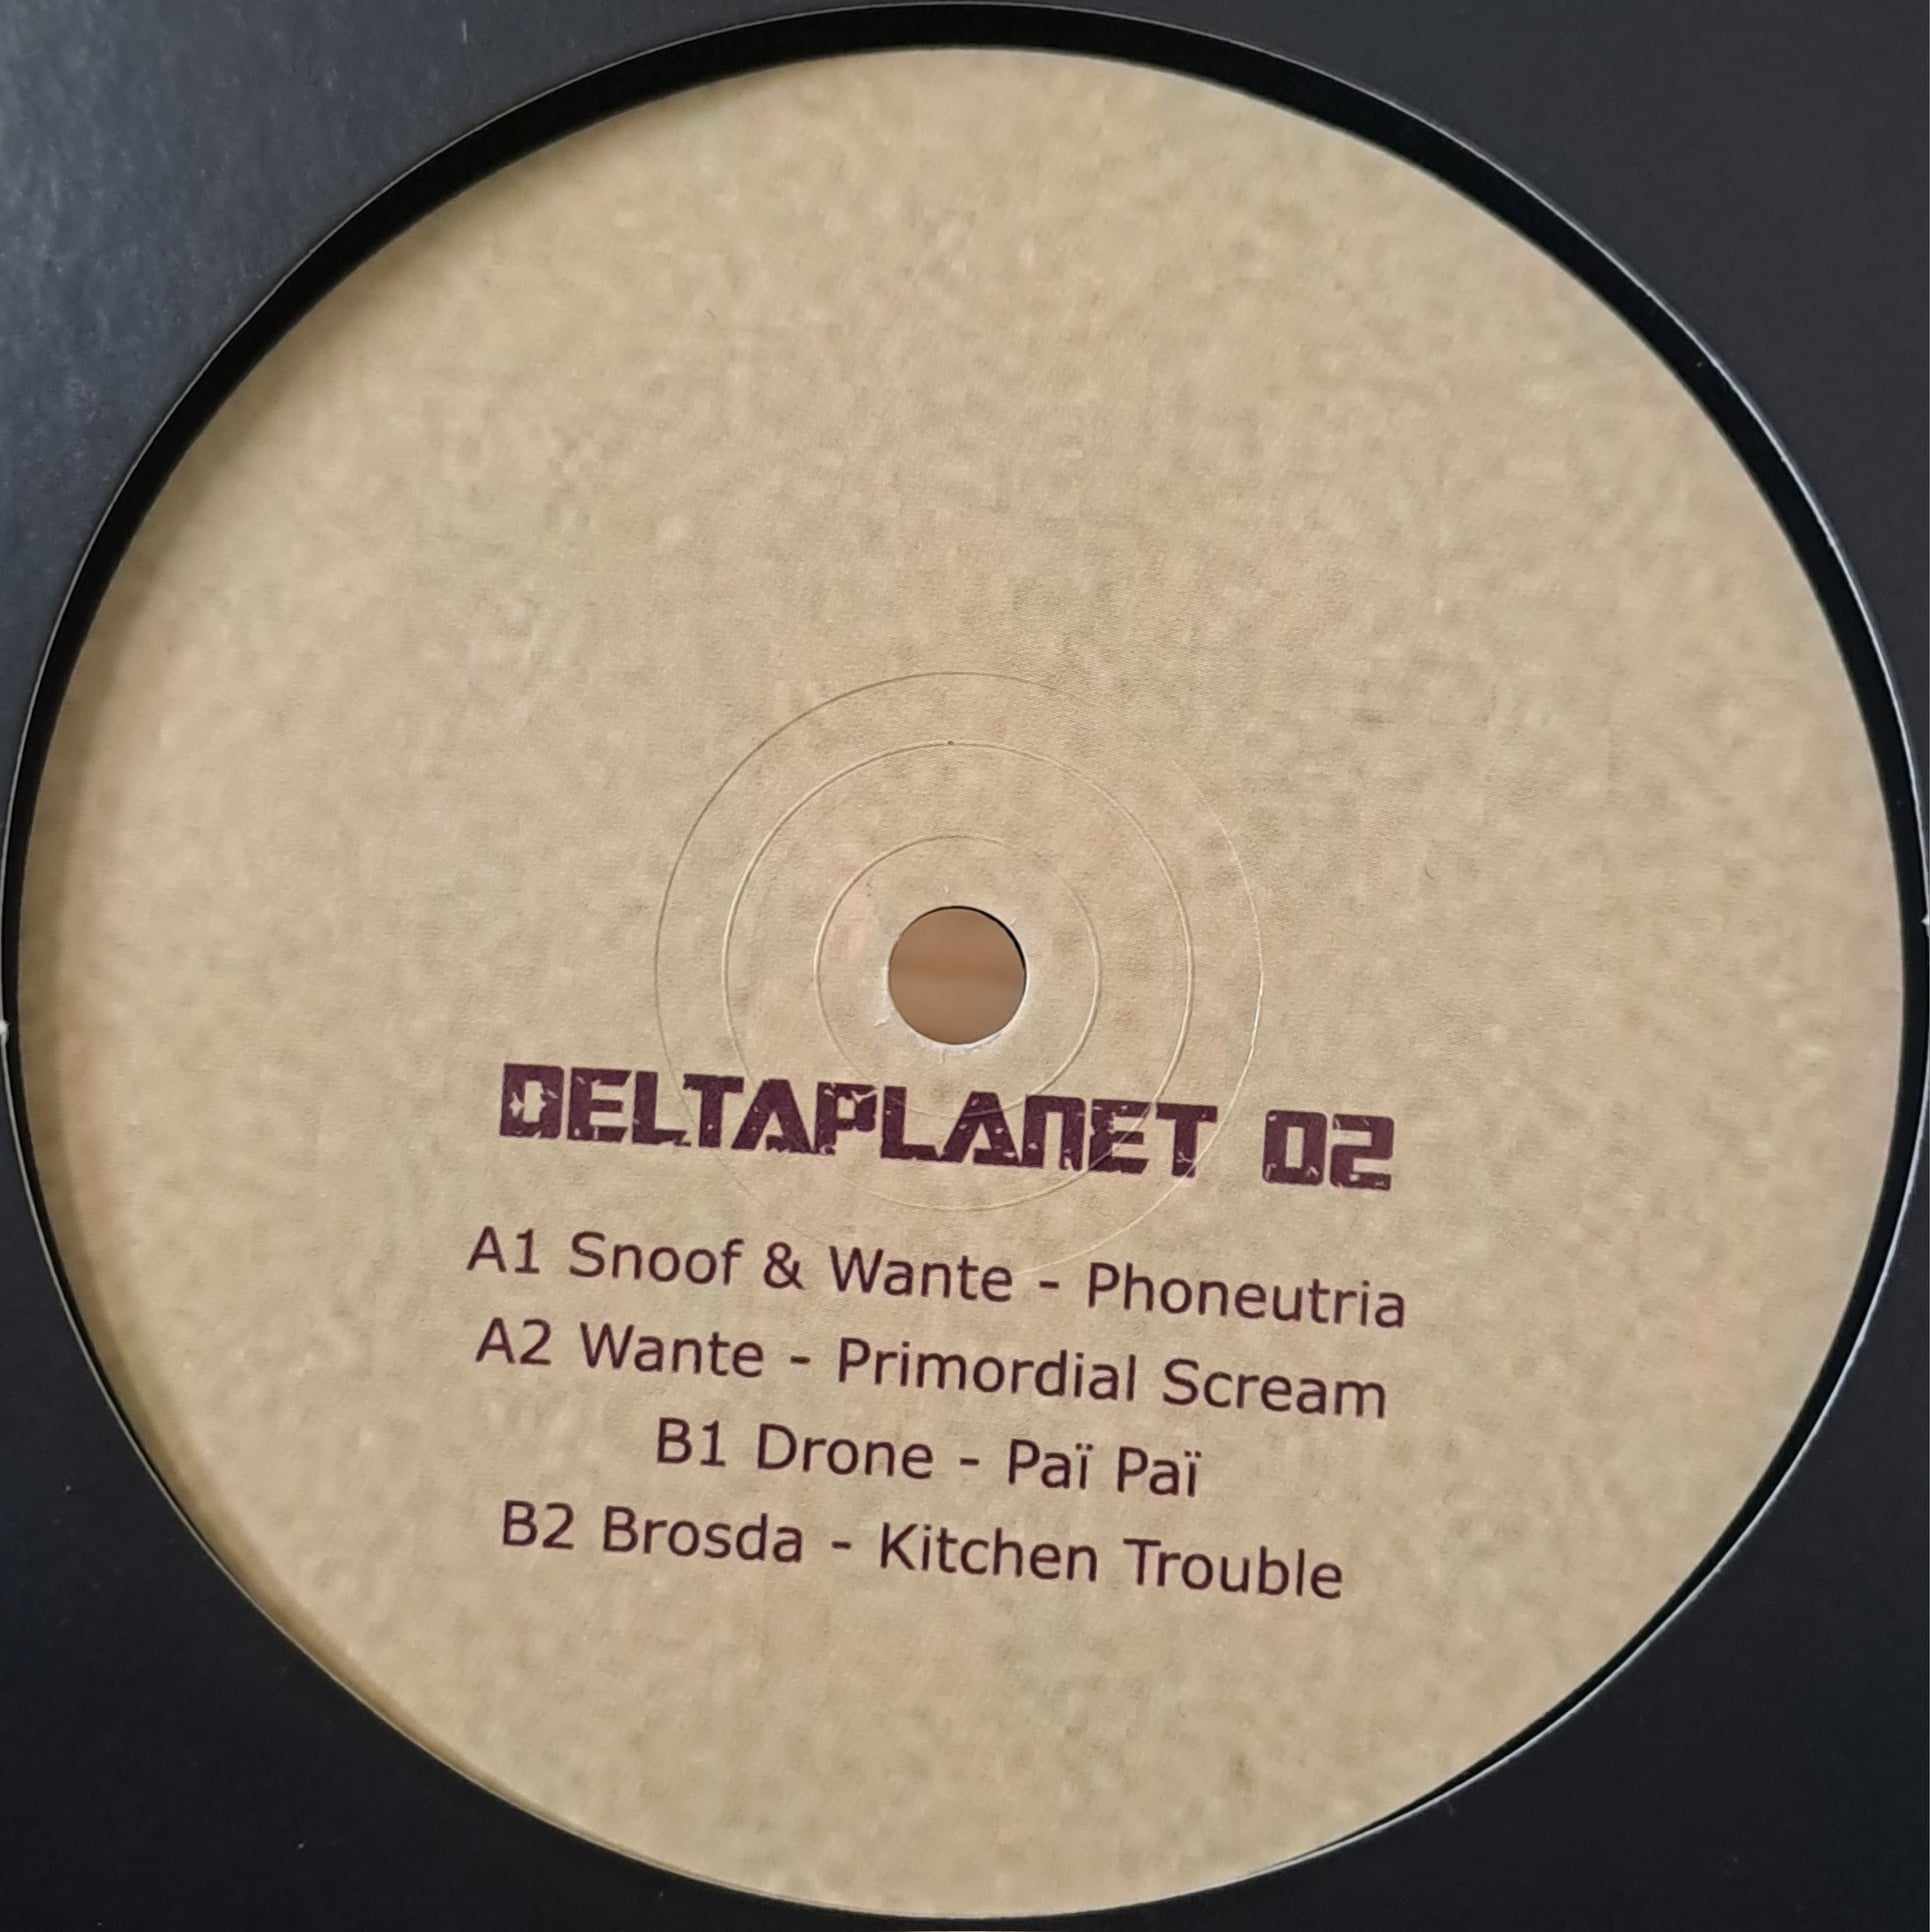 Deltaplanet 02 - vinyle acid